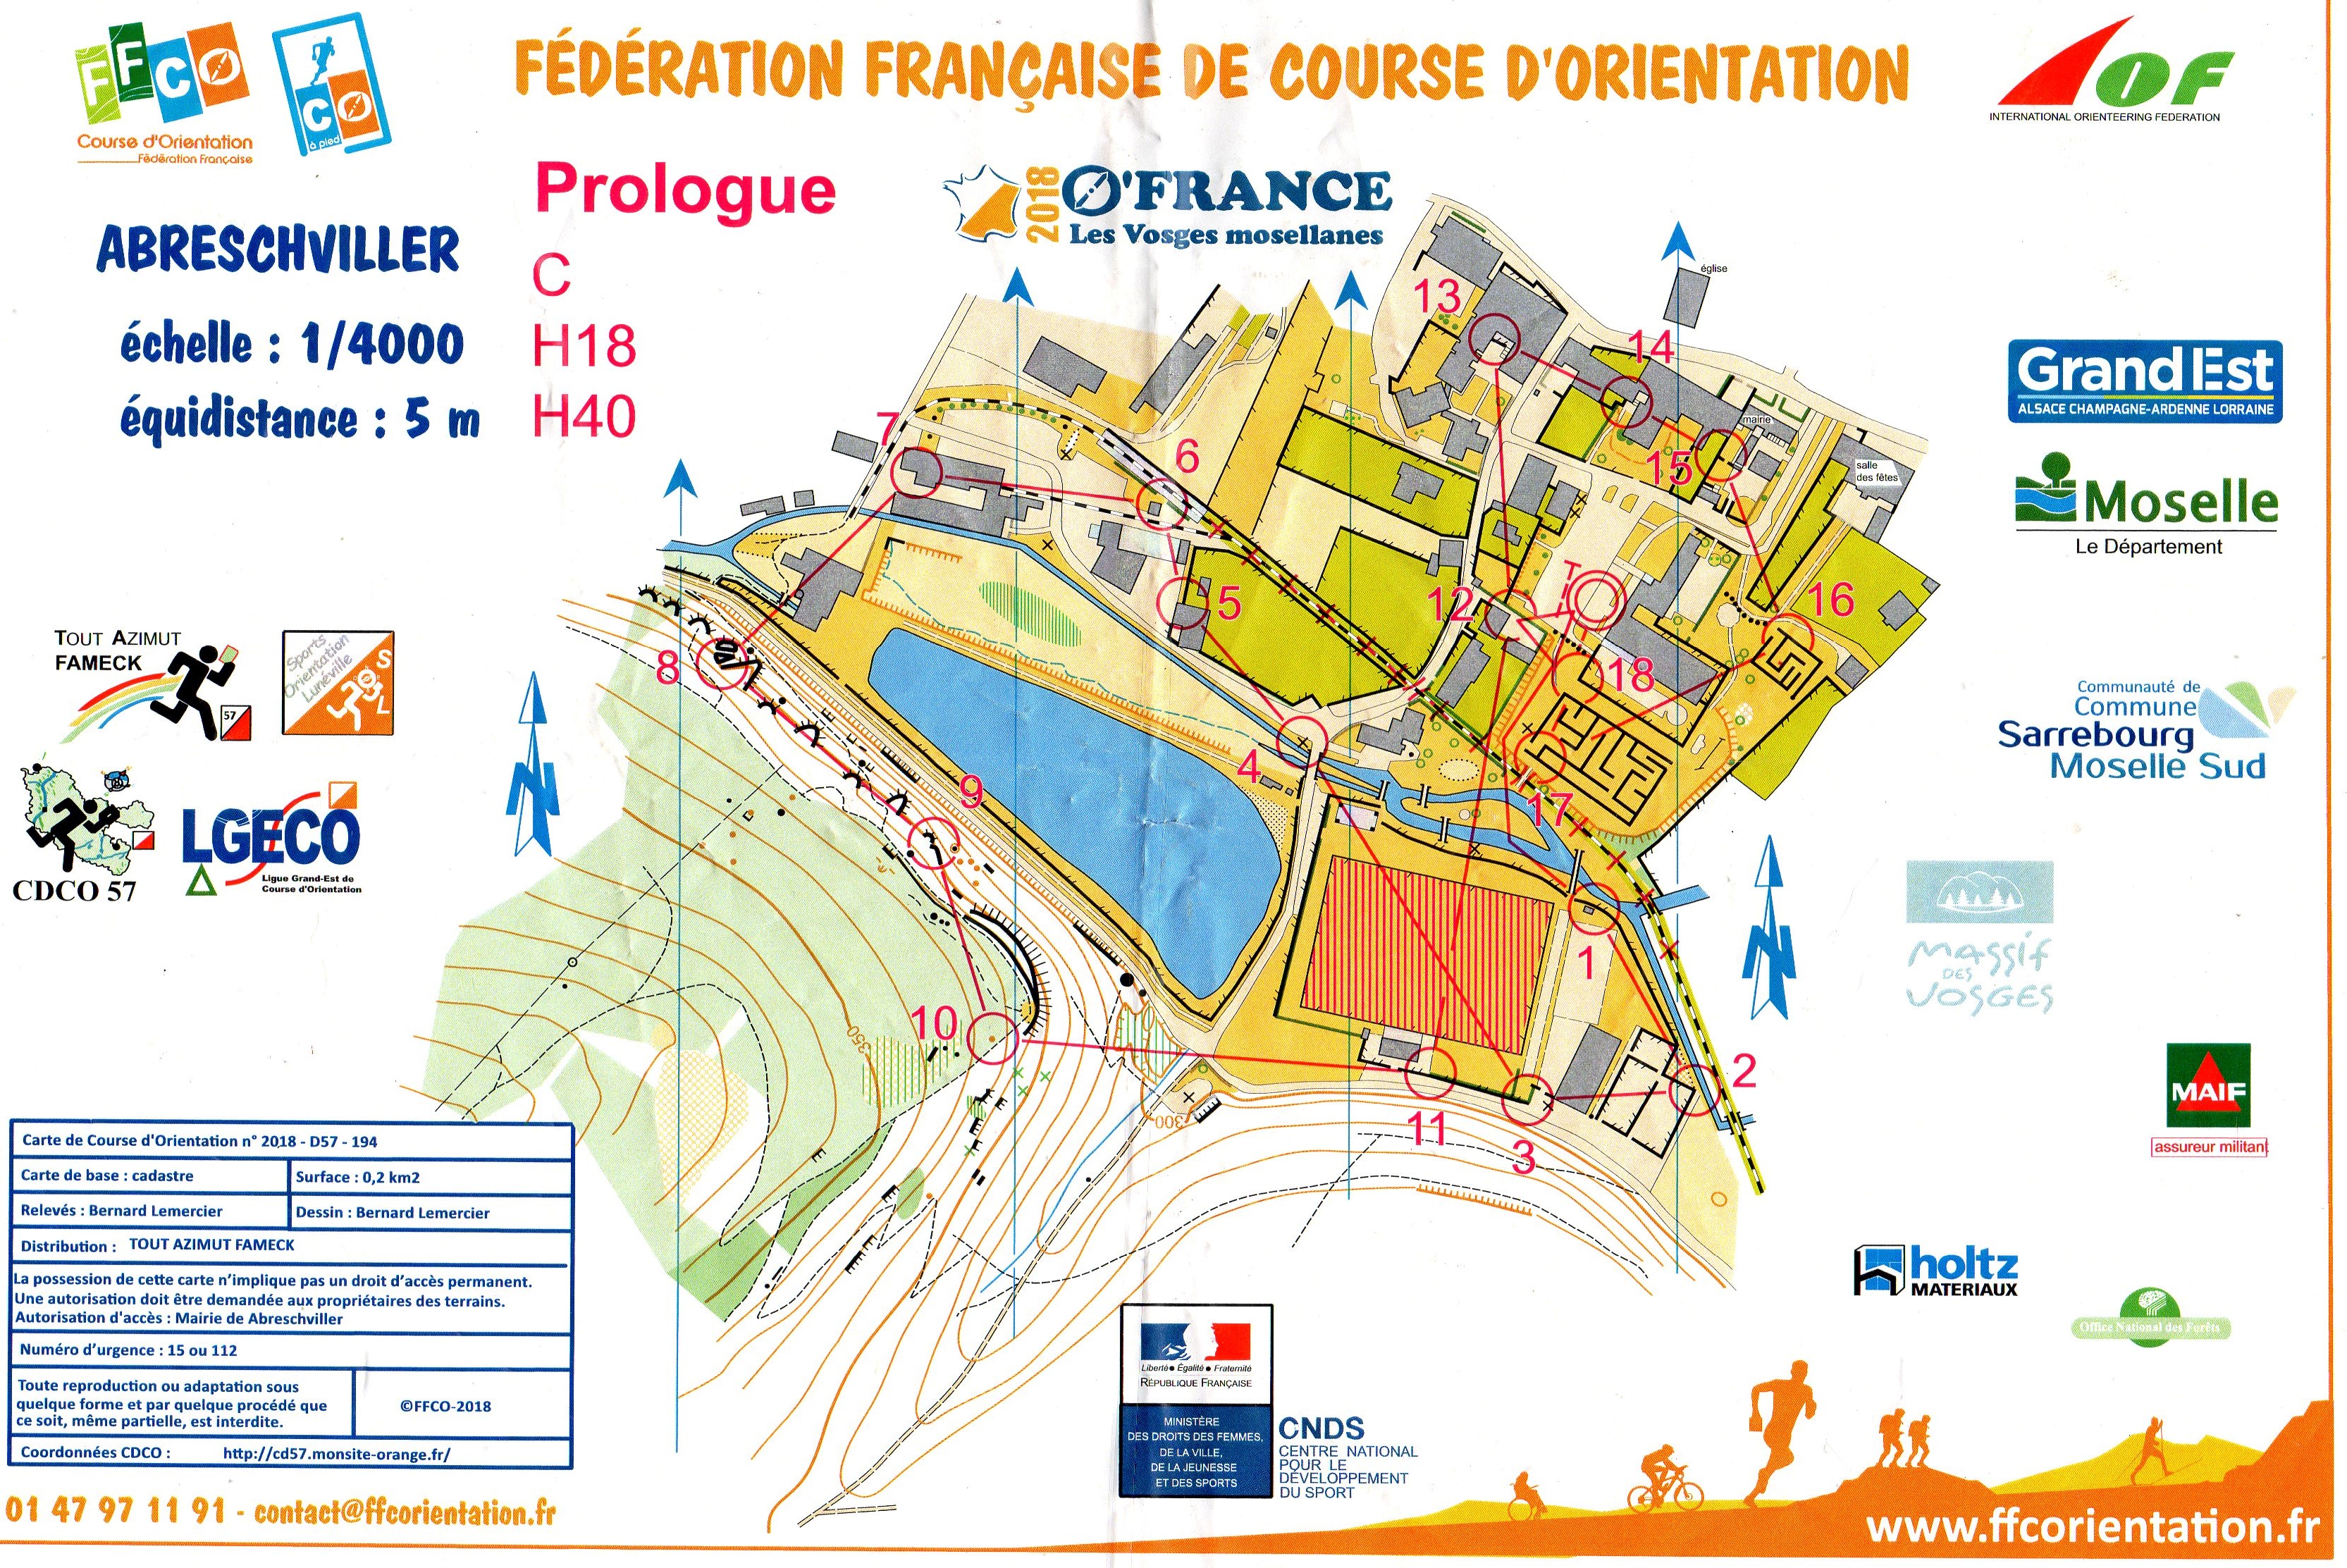 Prologue O'France 2018. Sprint (08-07-2018)